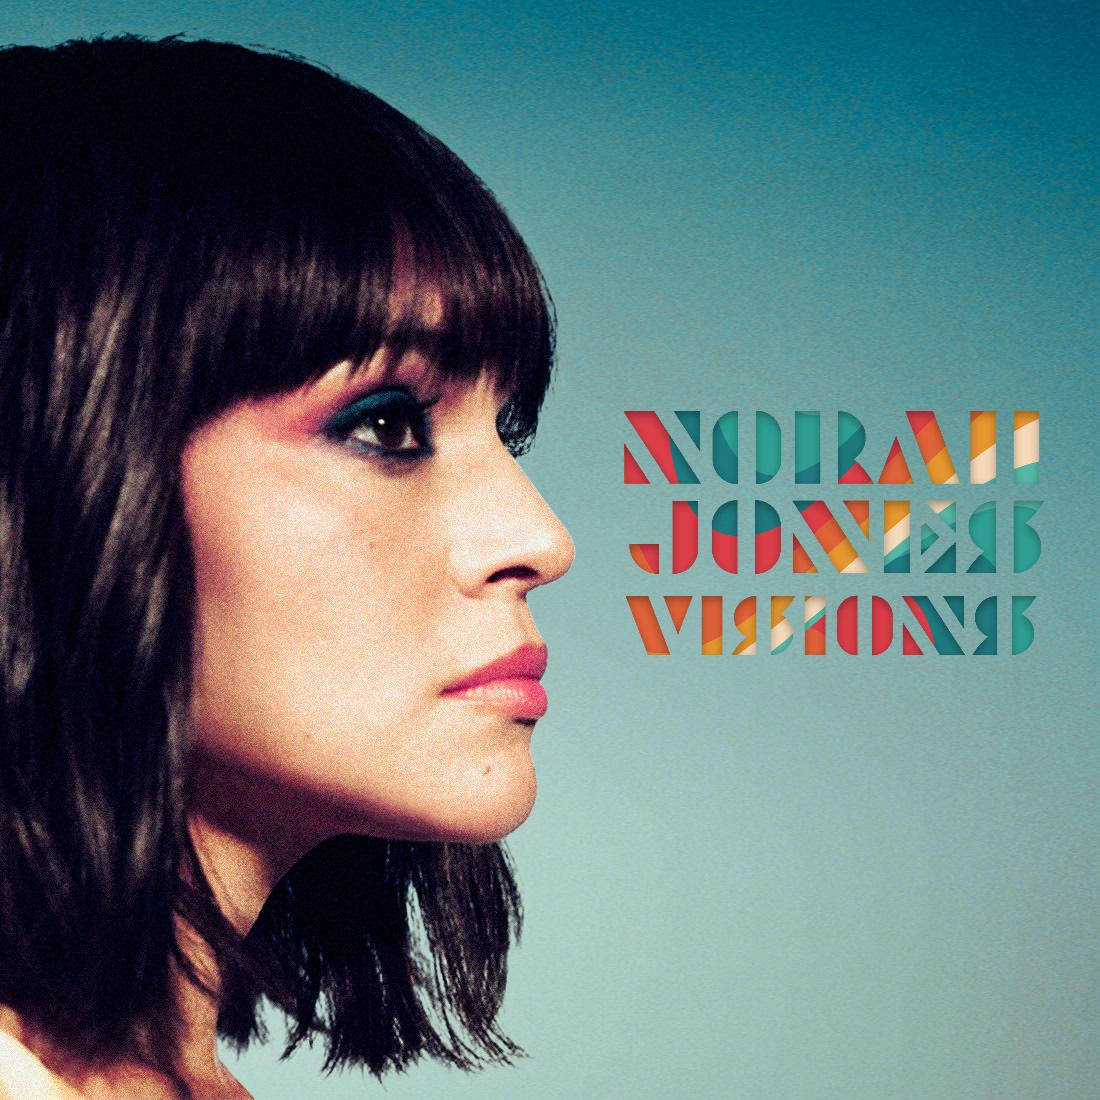 Norah Jones To Release Ninth Album Visions